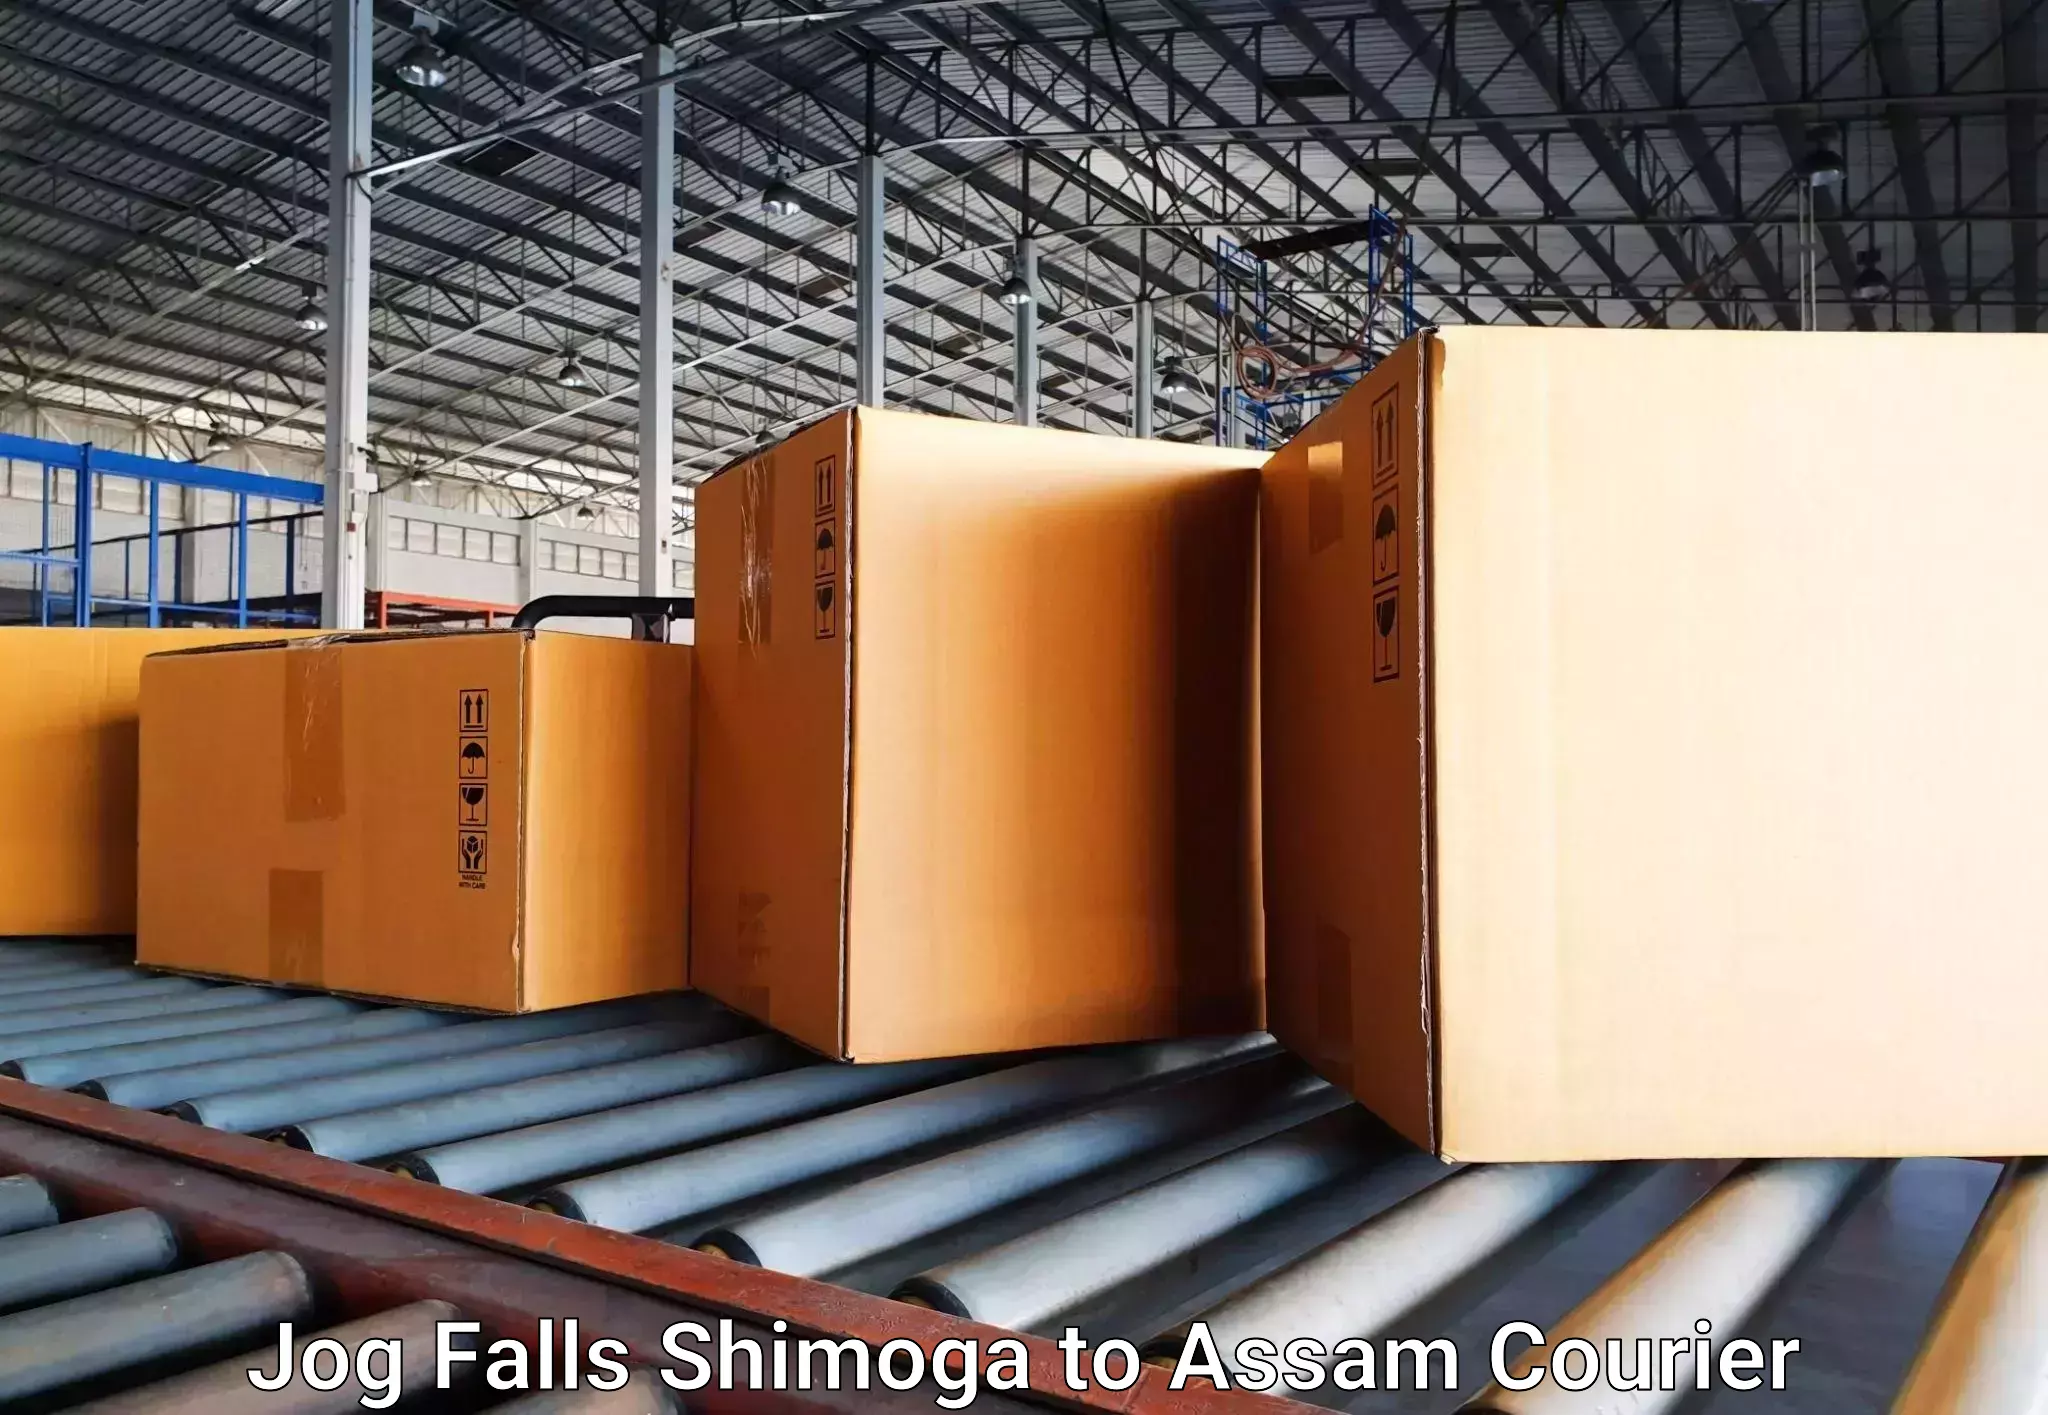 Baggage relocation service Jog Falls Shimoga to Guwahati